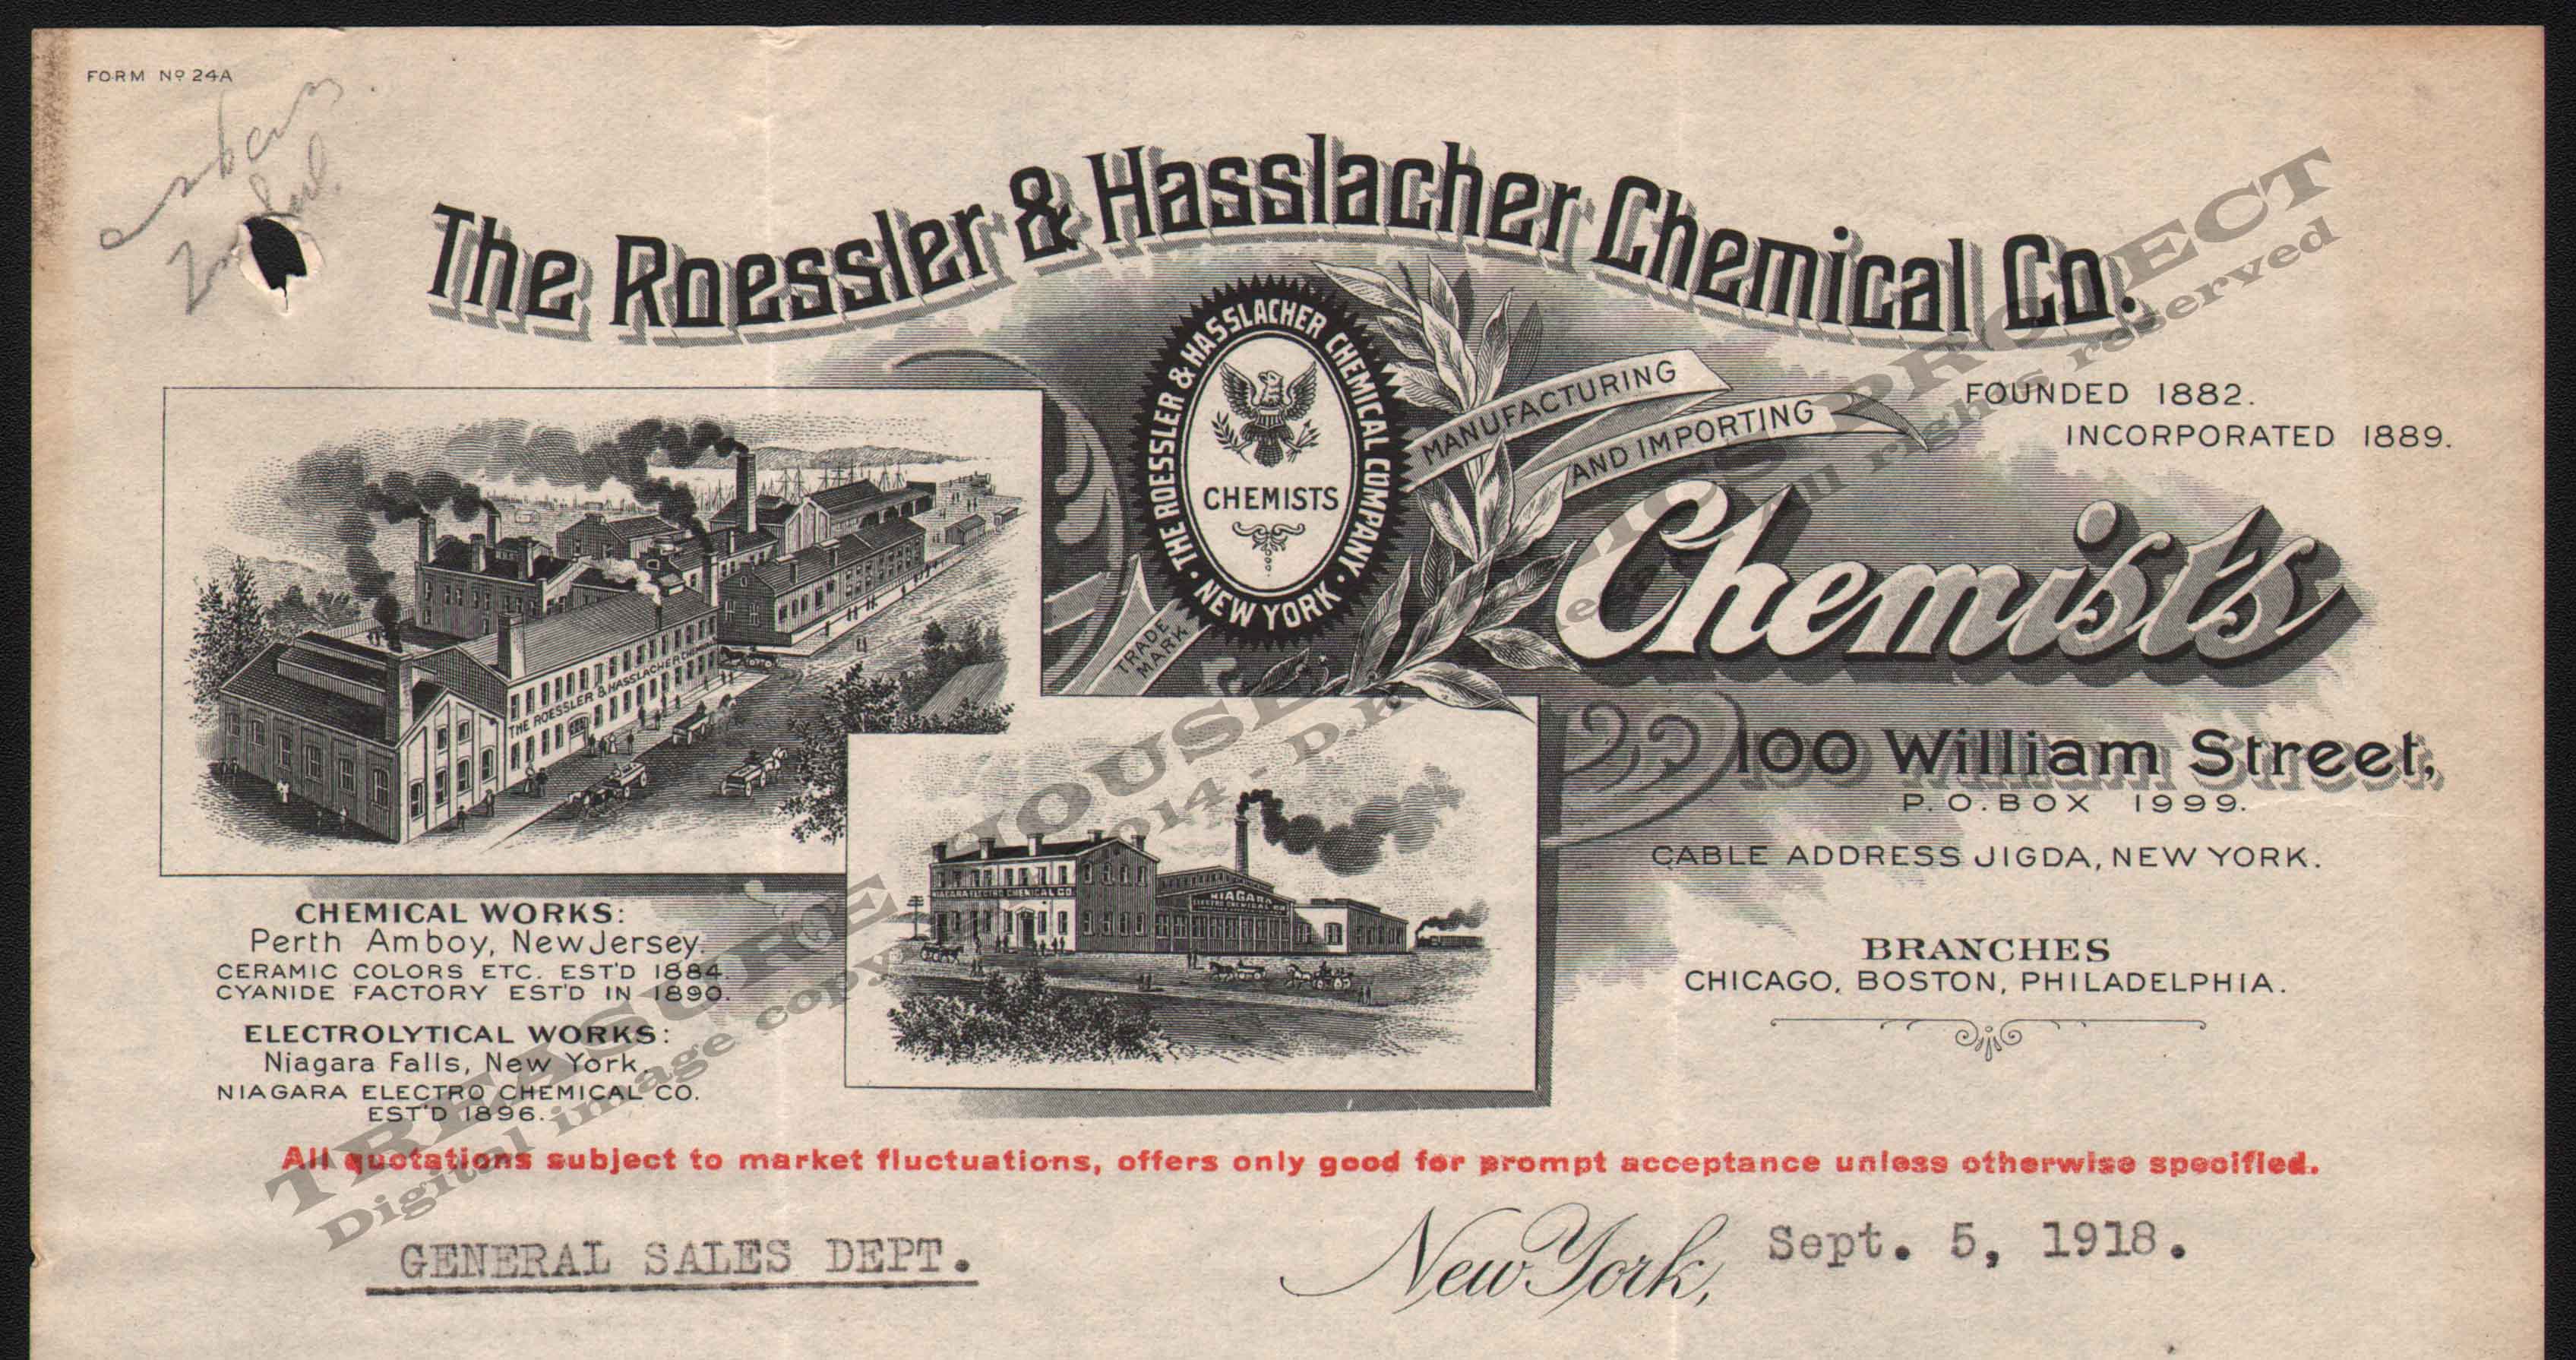 LETTERHEAD/LETTERHEAD_ROSSLER_HASSLACHER_CHEMICAL_COMPANY_NEW_YORK_1918_6_5_CORONA_2_400_CROP_EMBOSS.jpg